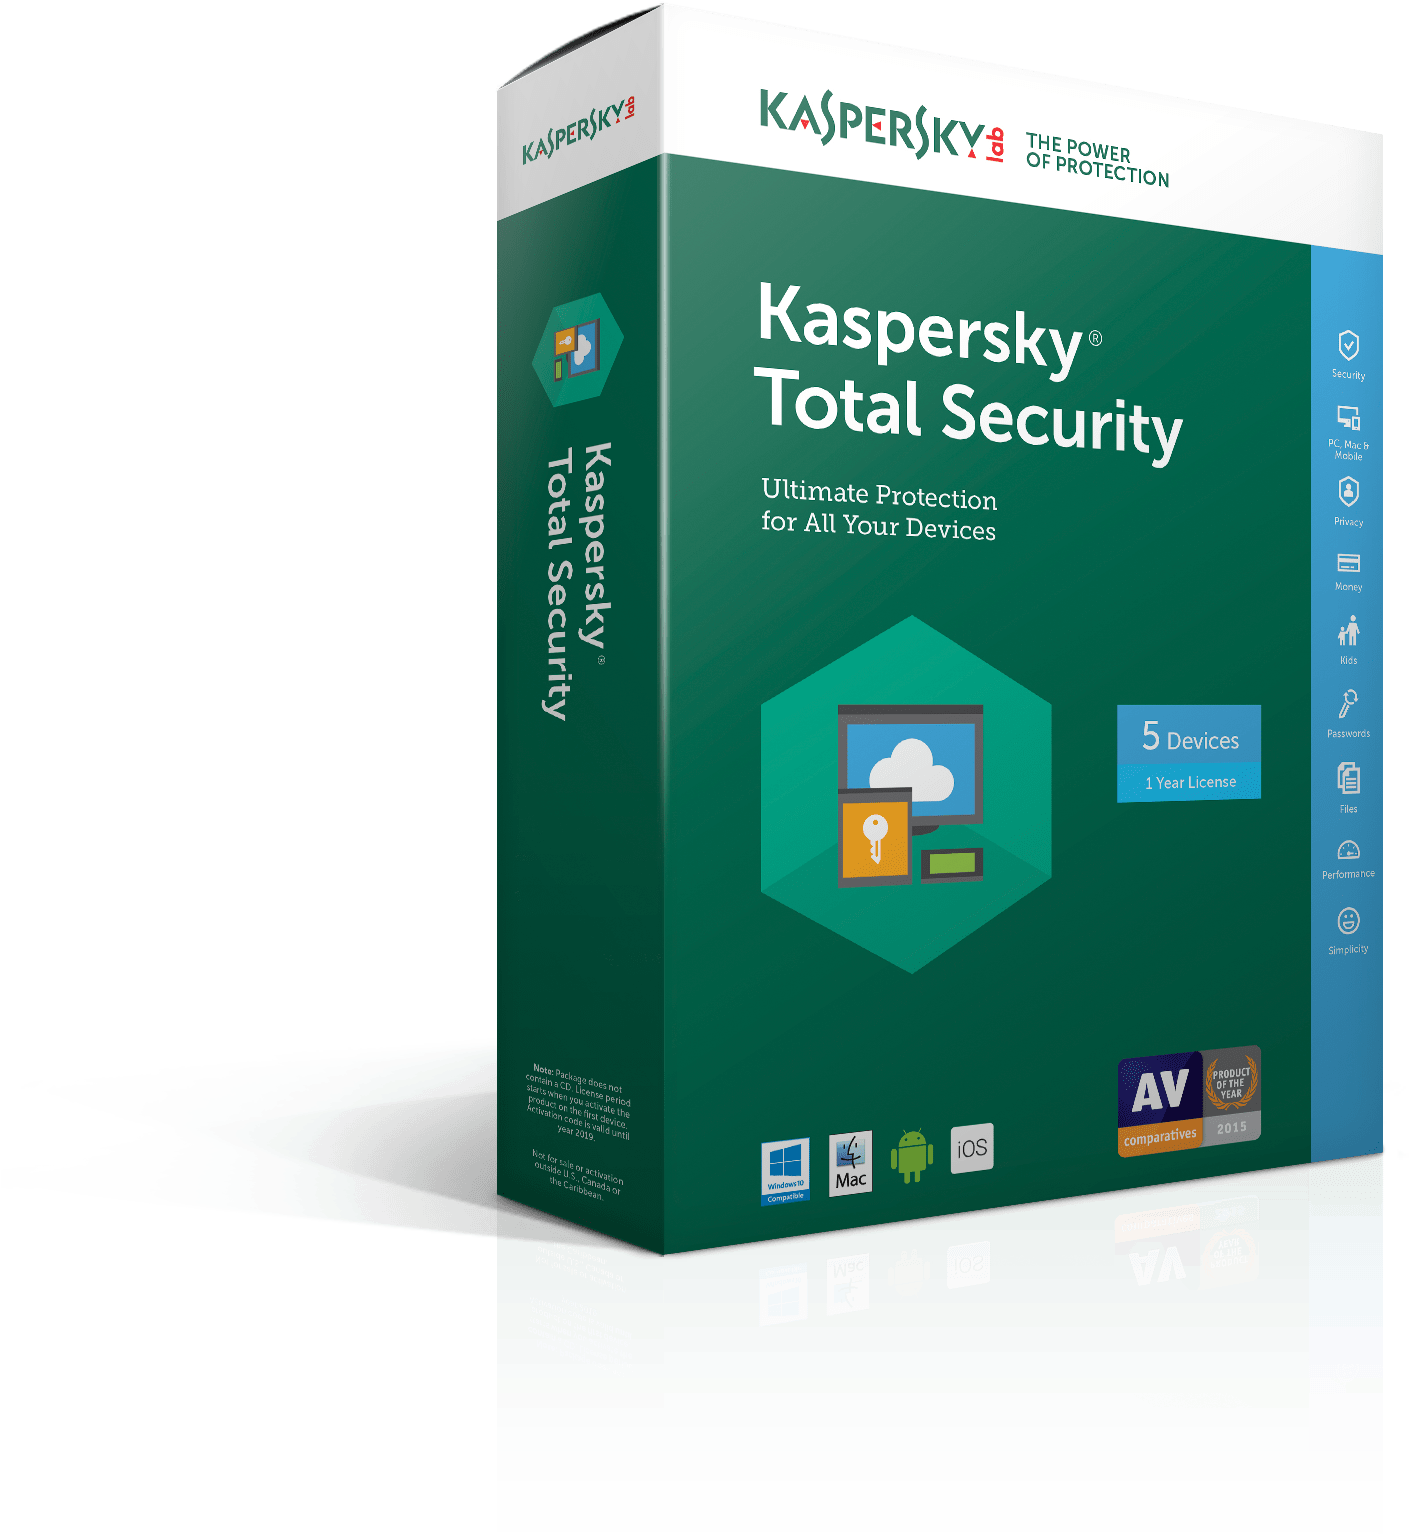 Kaspersky Total Security Review Amp Rating Pcmagcom,kaspersky - Kaspersky 2018 Activation Code (1772x1772)